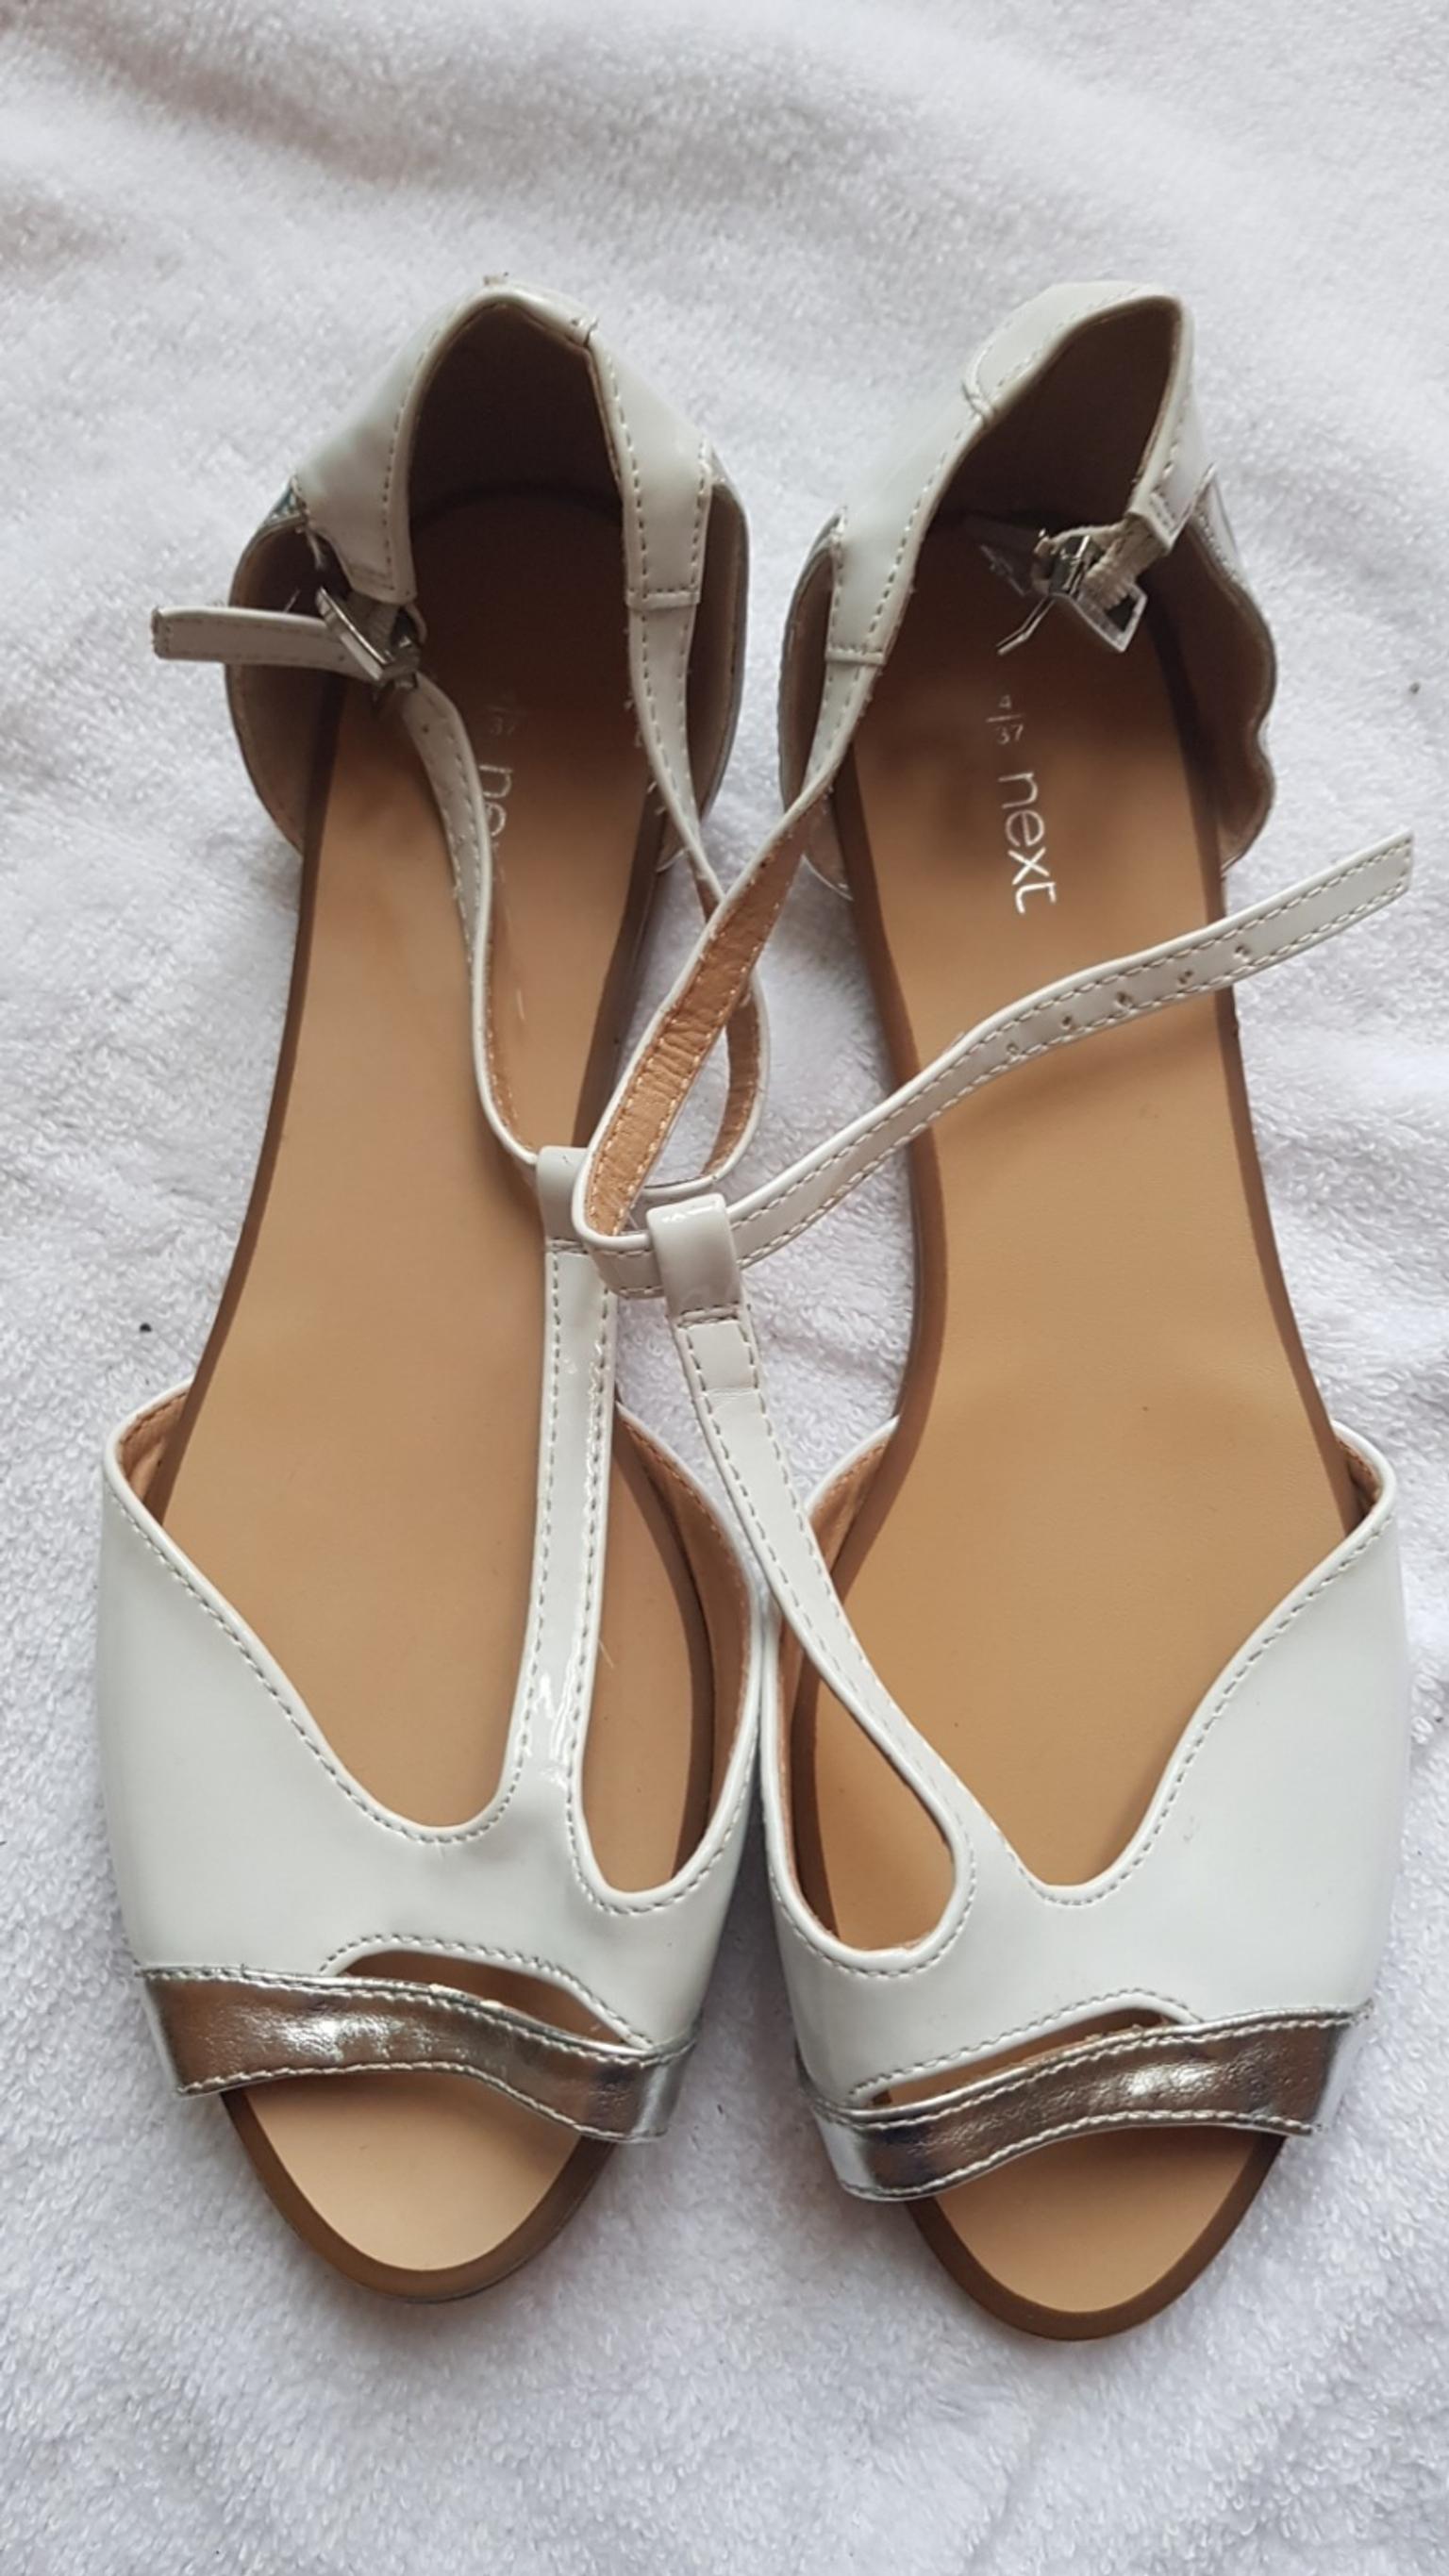 girls white sandals size 4